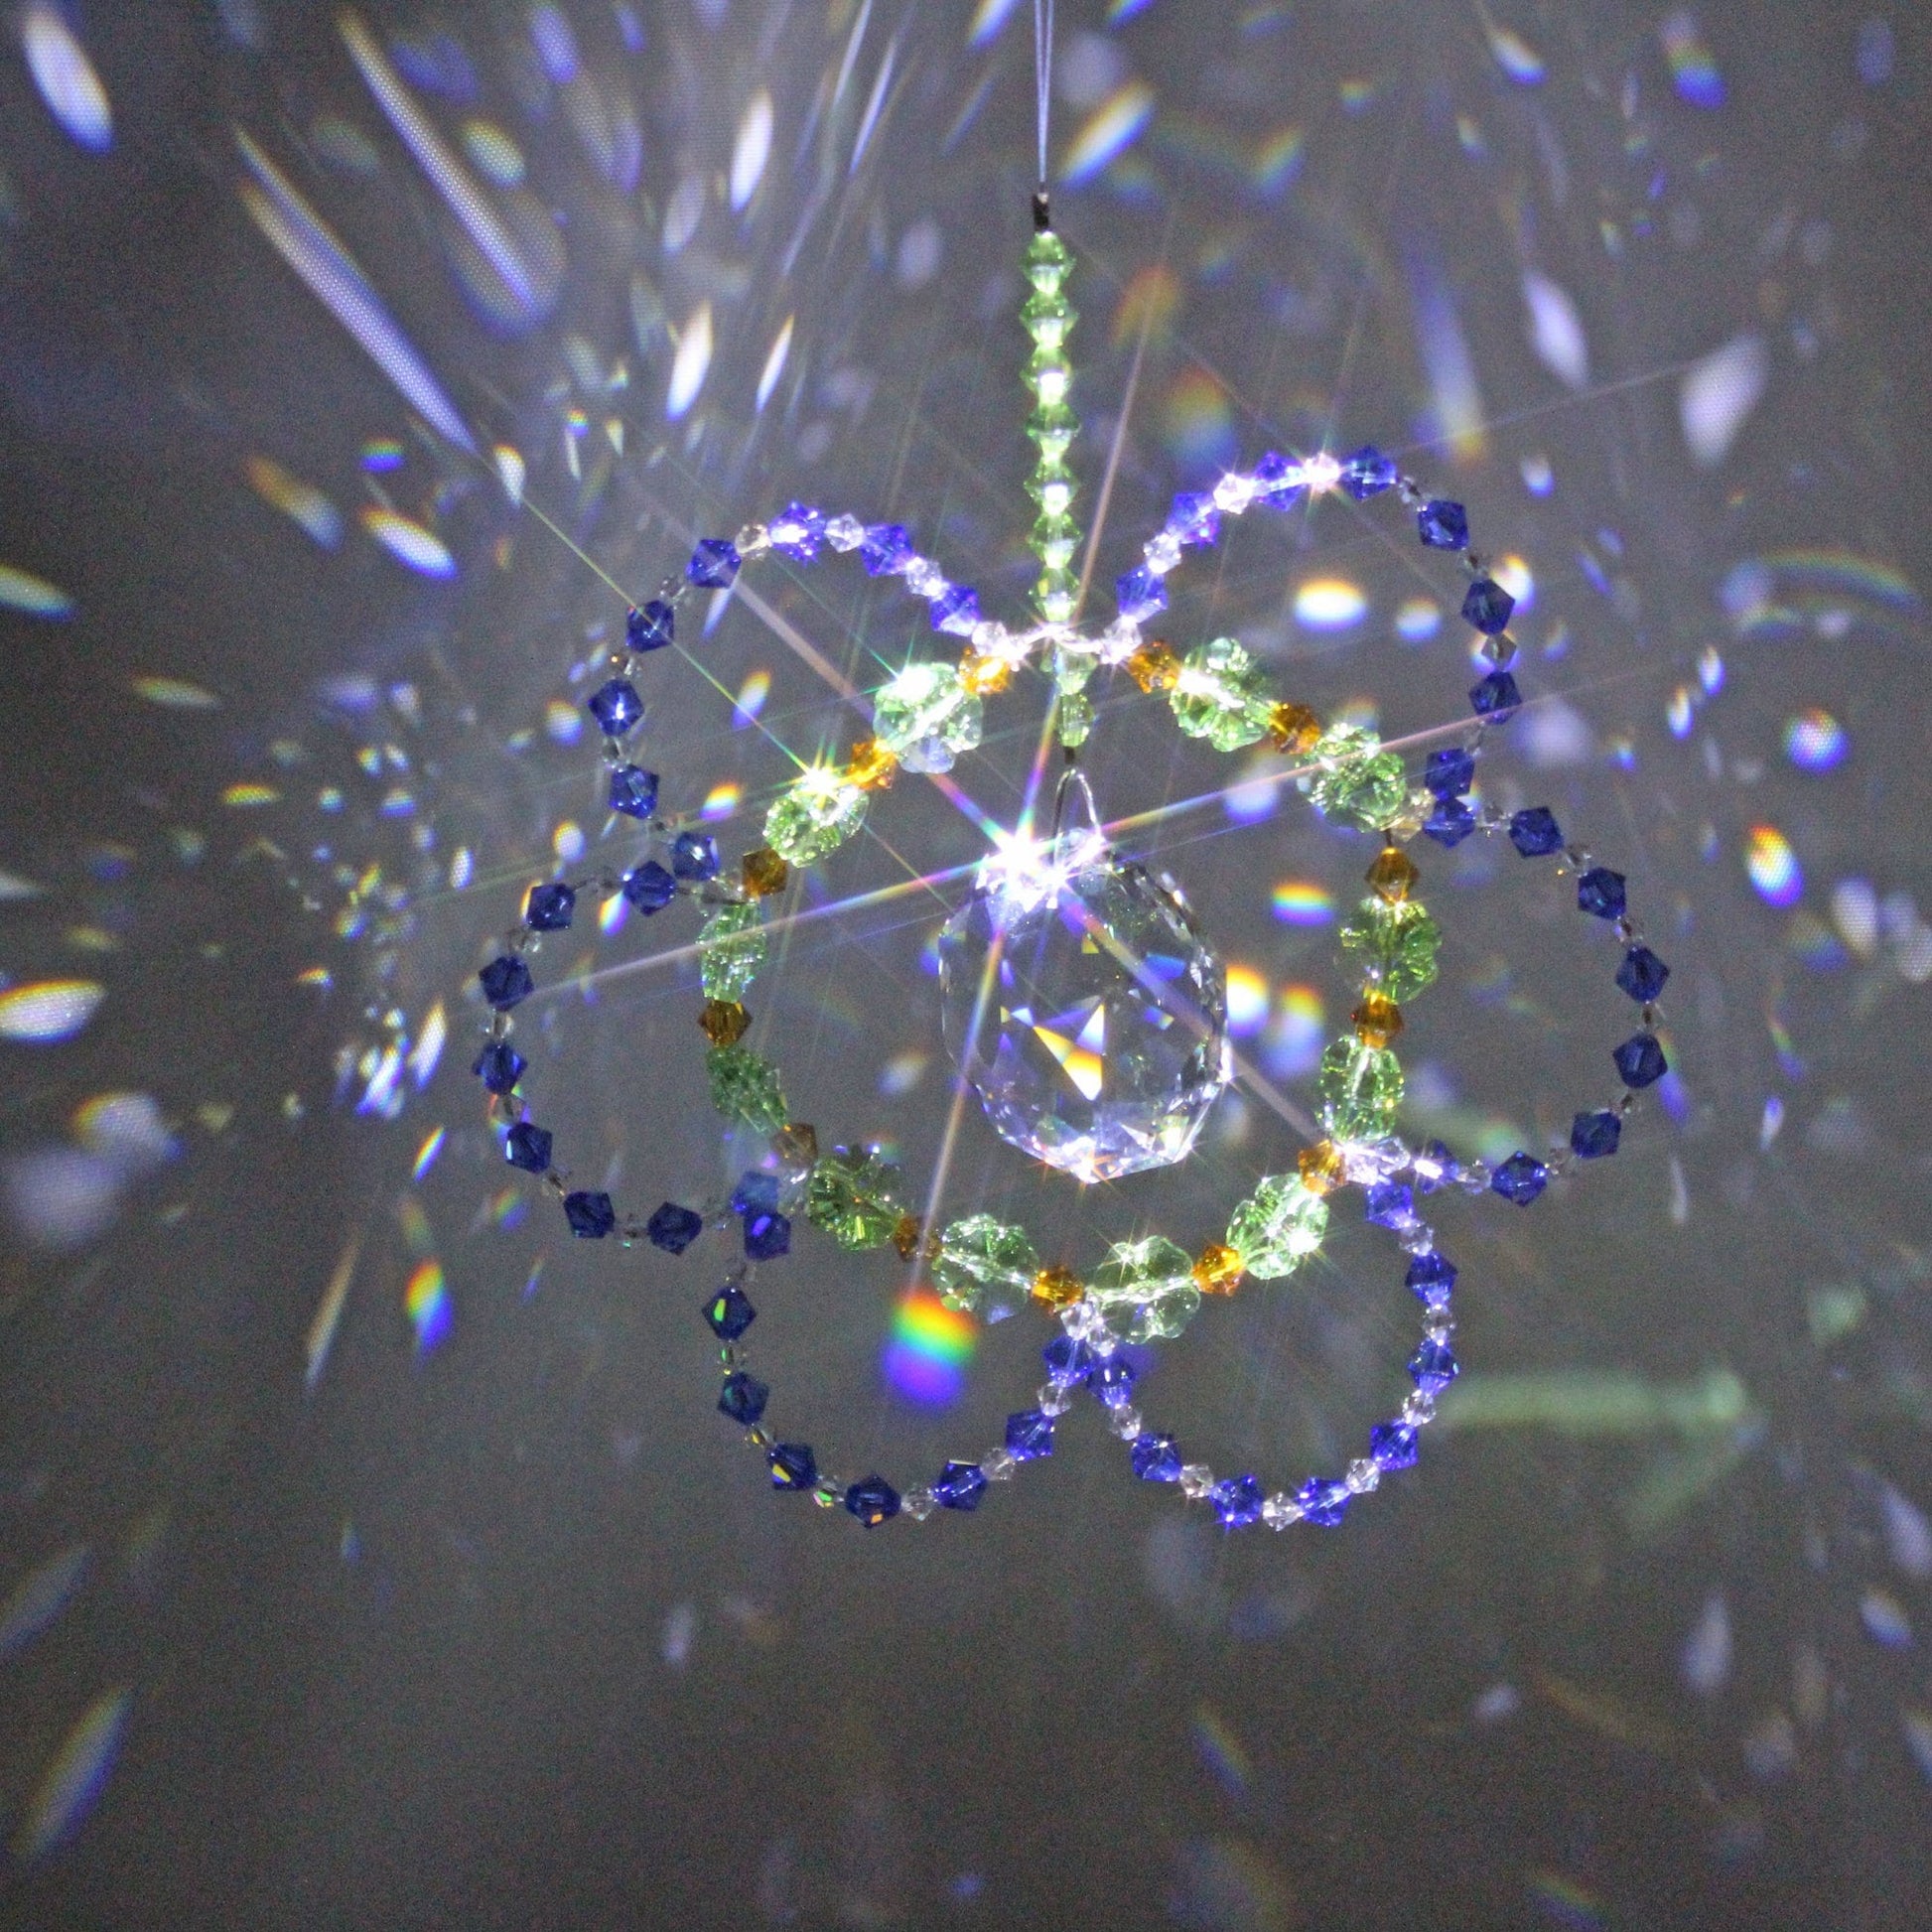 Swarovski Crystals Prism Mobile Window Suncatcher Rainbow Ornaments Sun Catcher Blue Flower